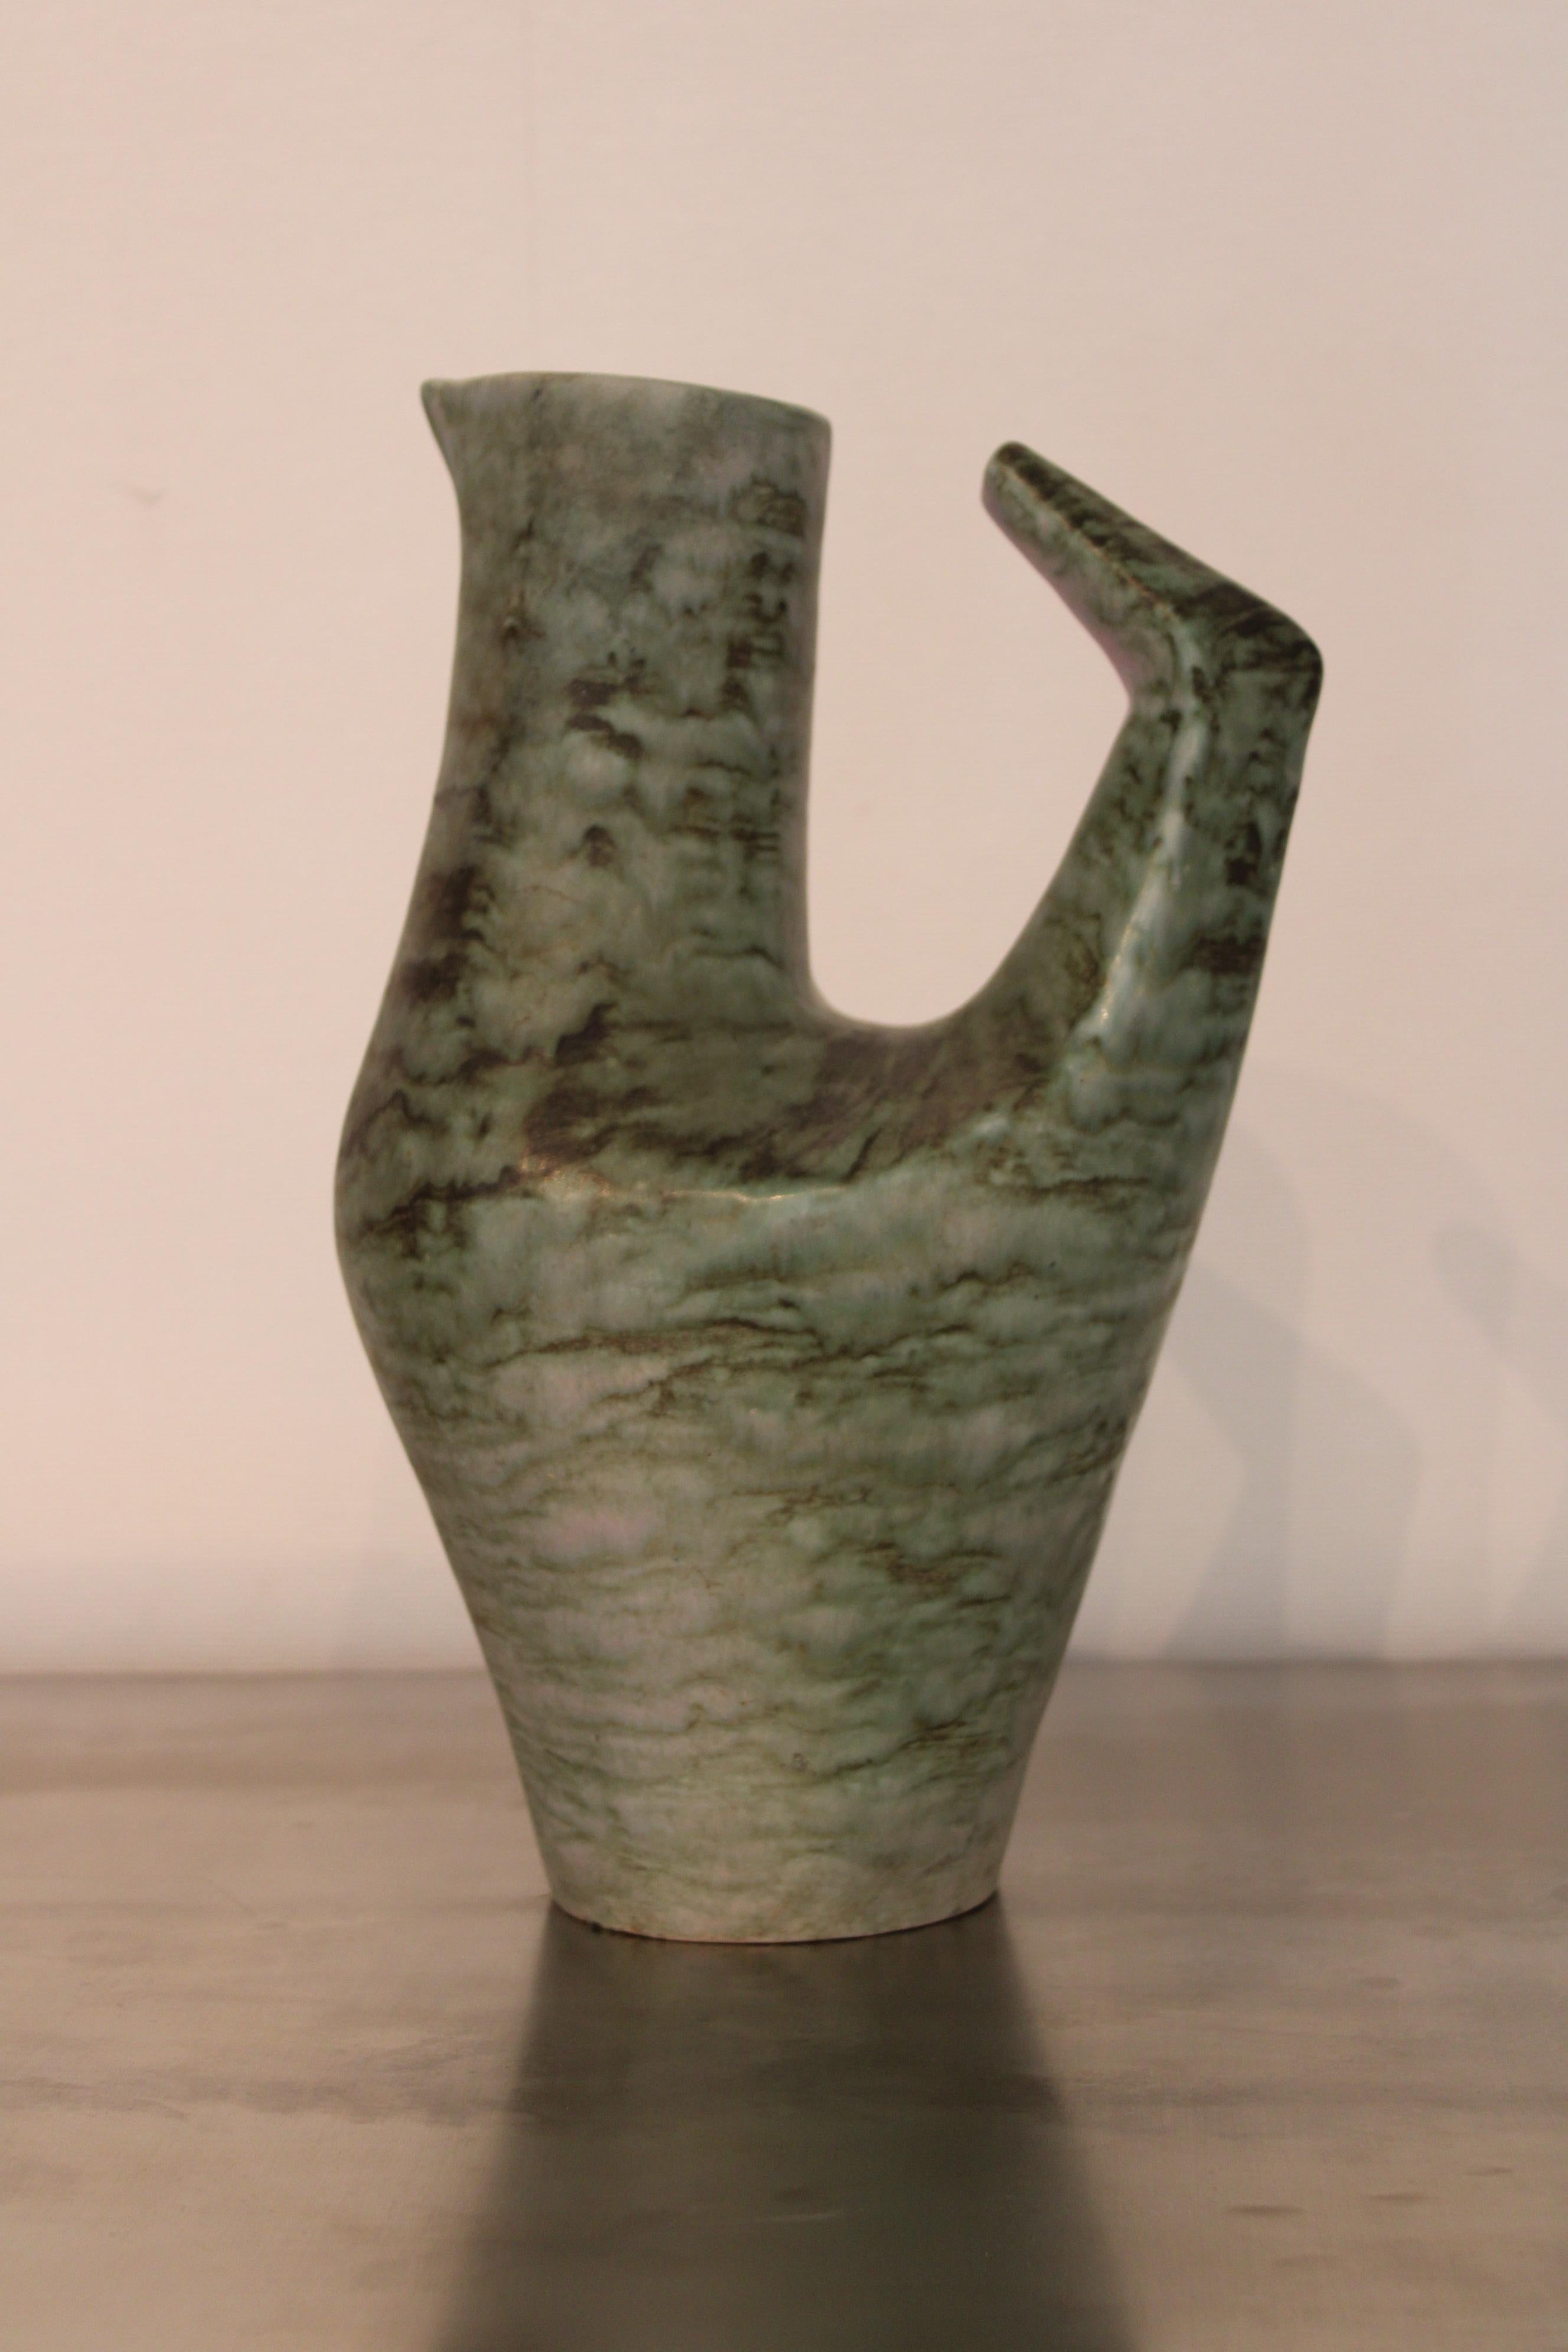 Jacques Blin (1920-1995)
Zoomorphic vase-pichet (or 